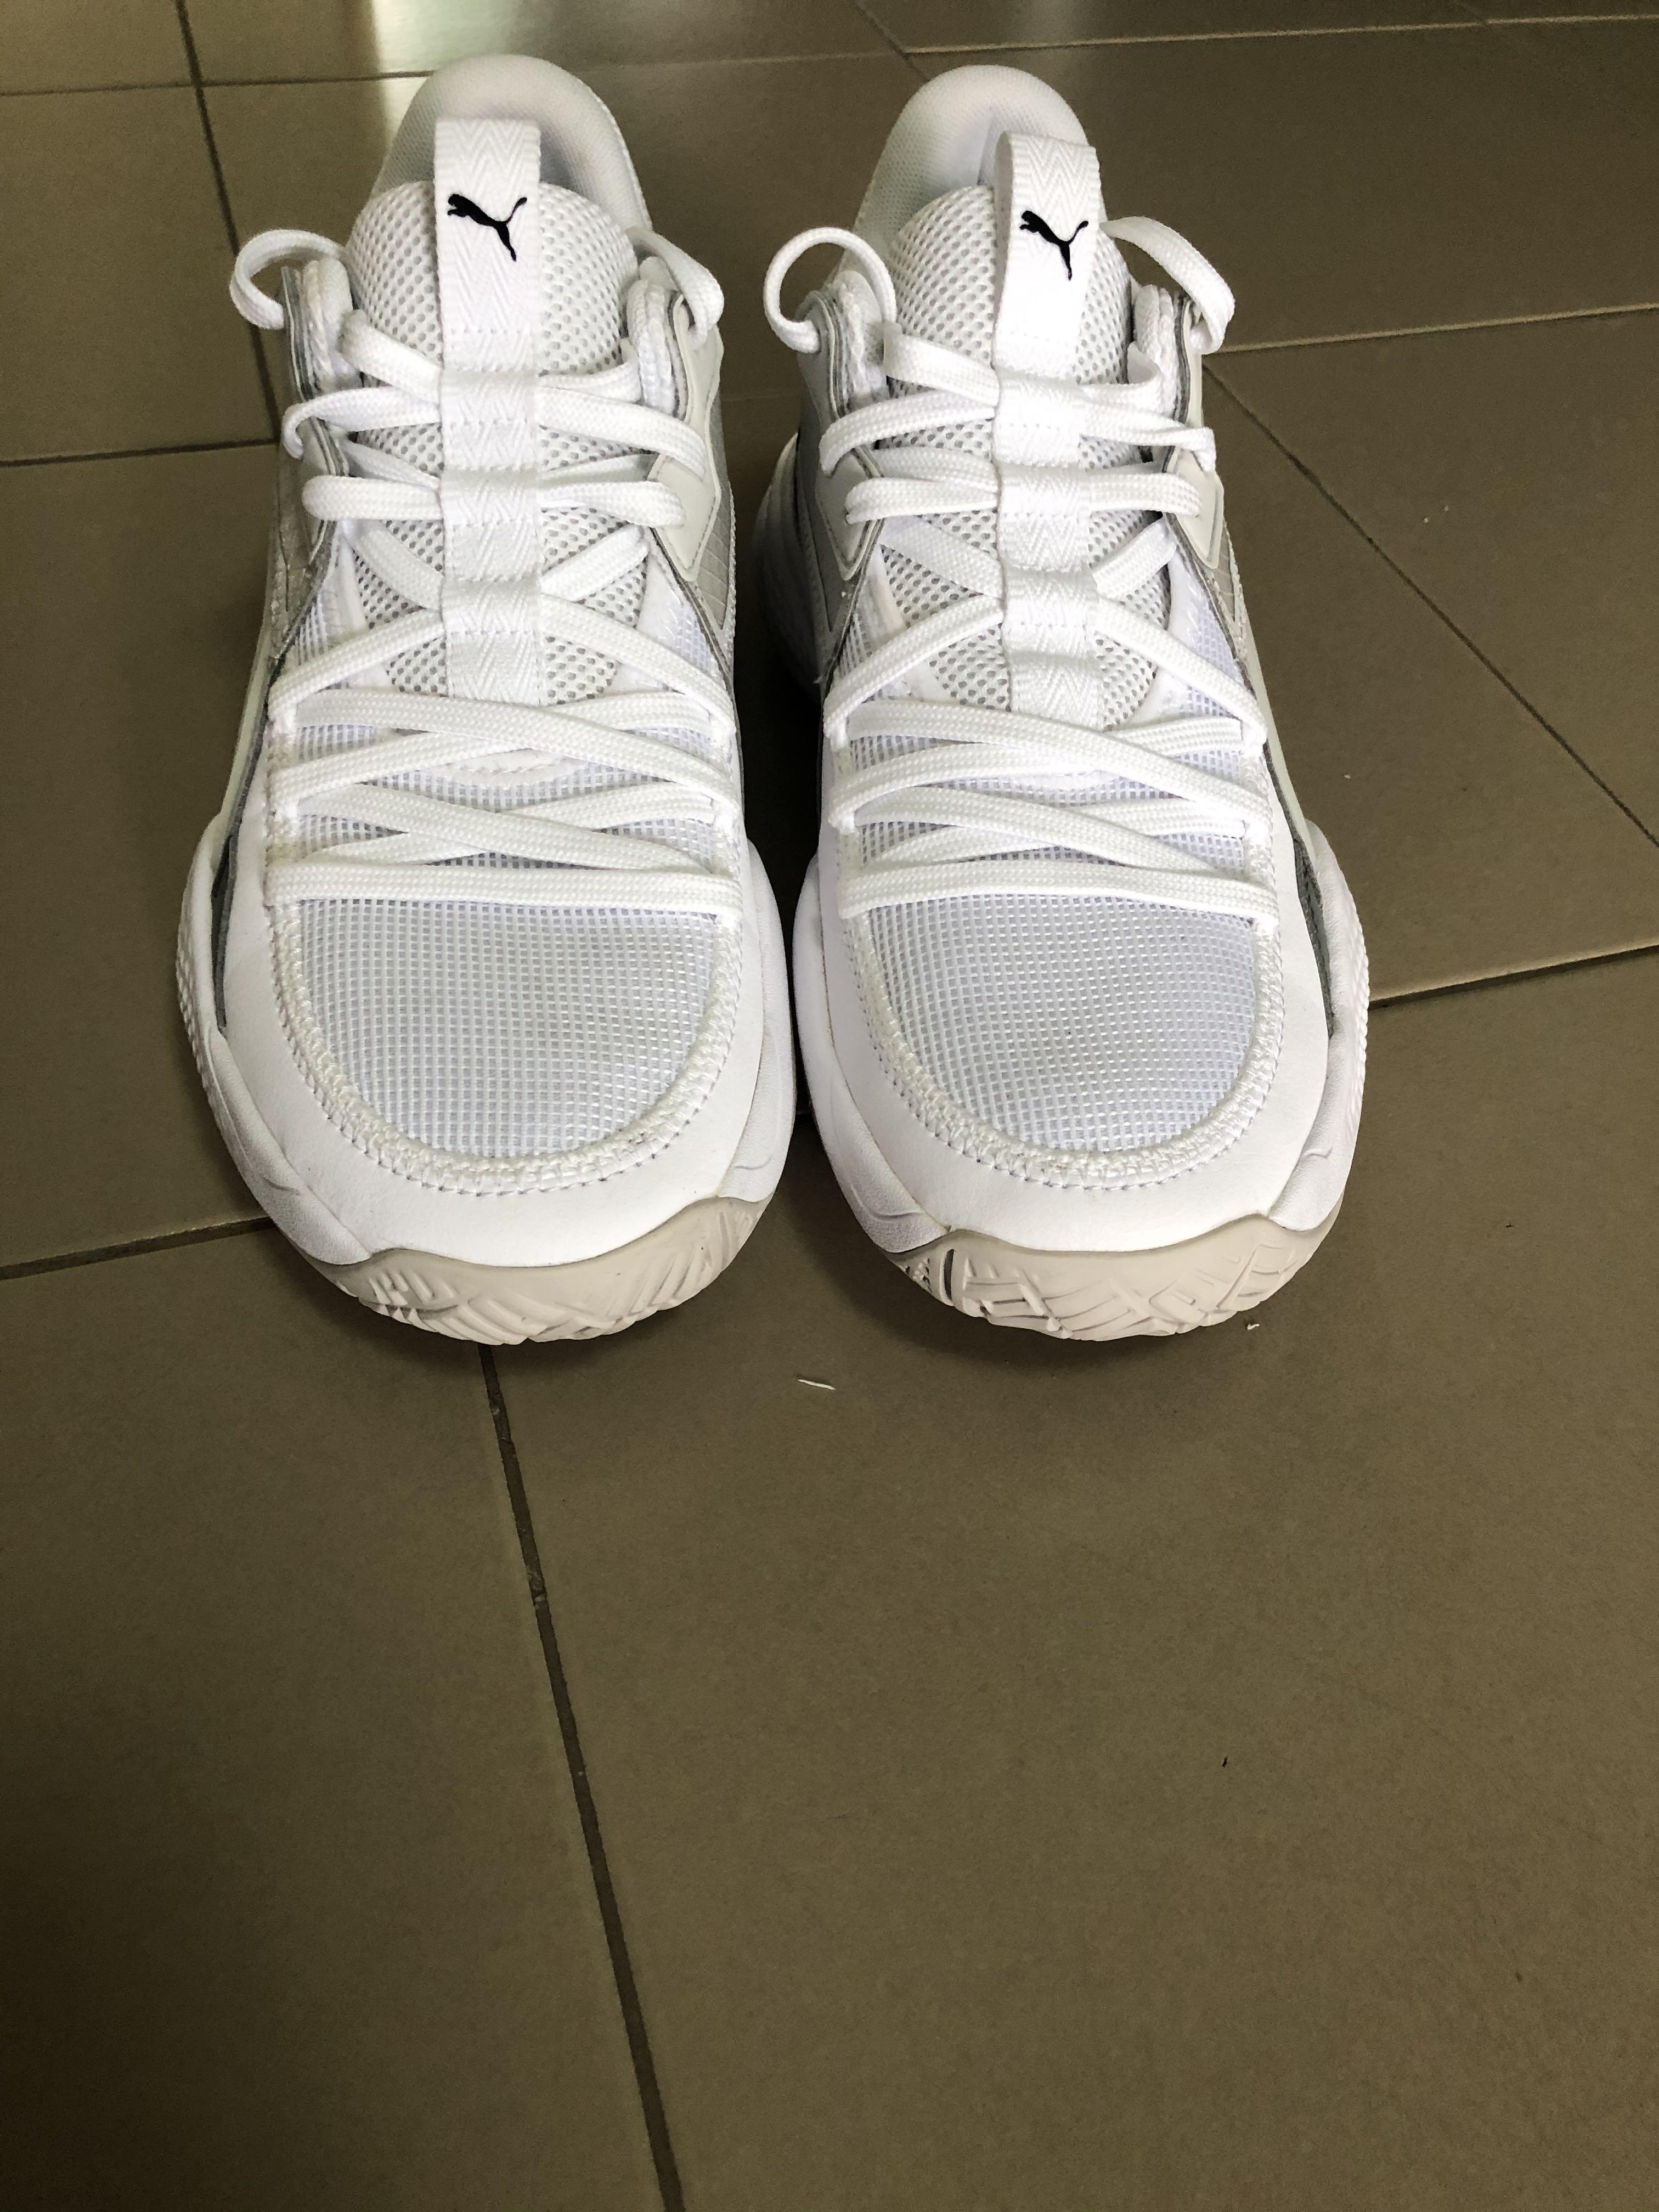 white ball shoes